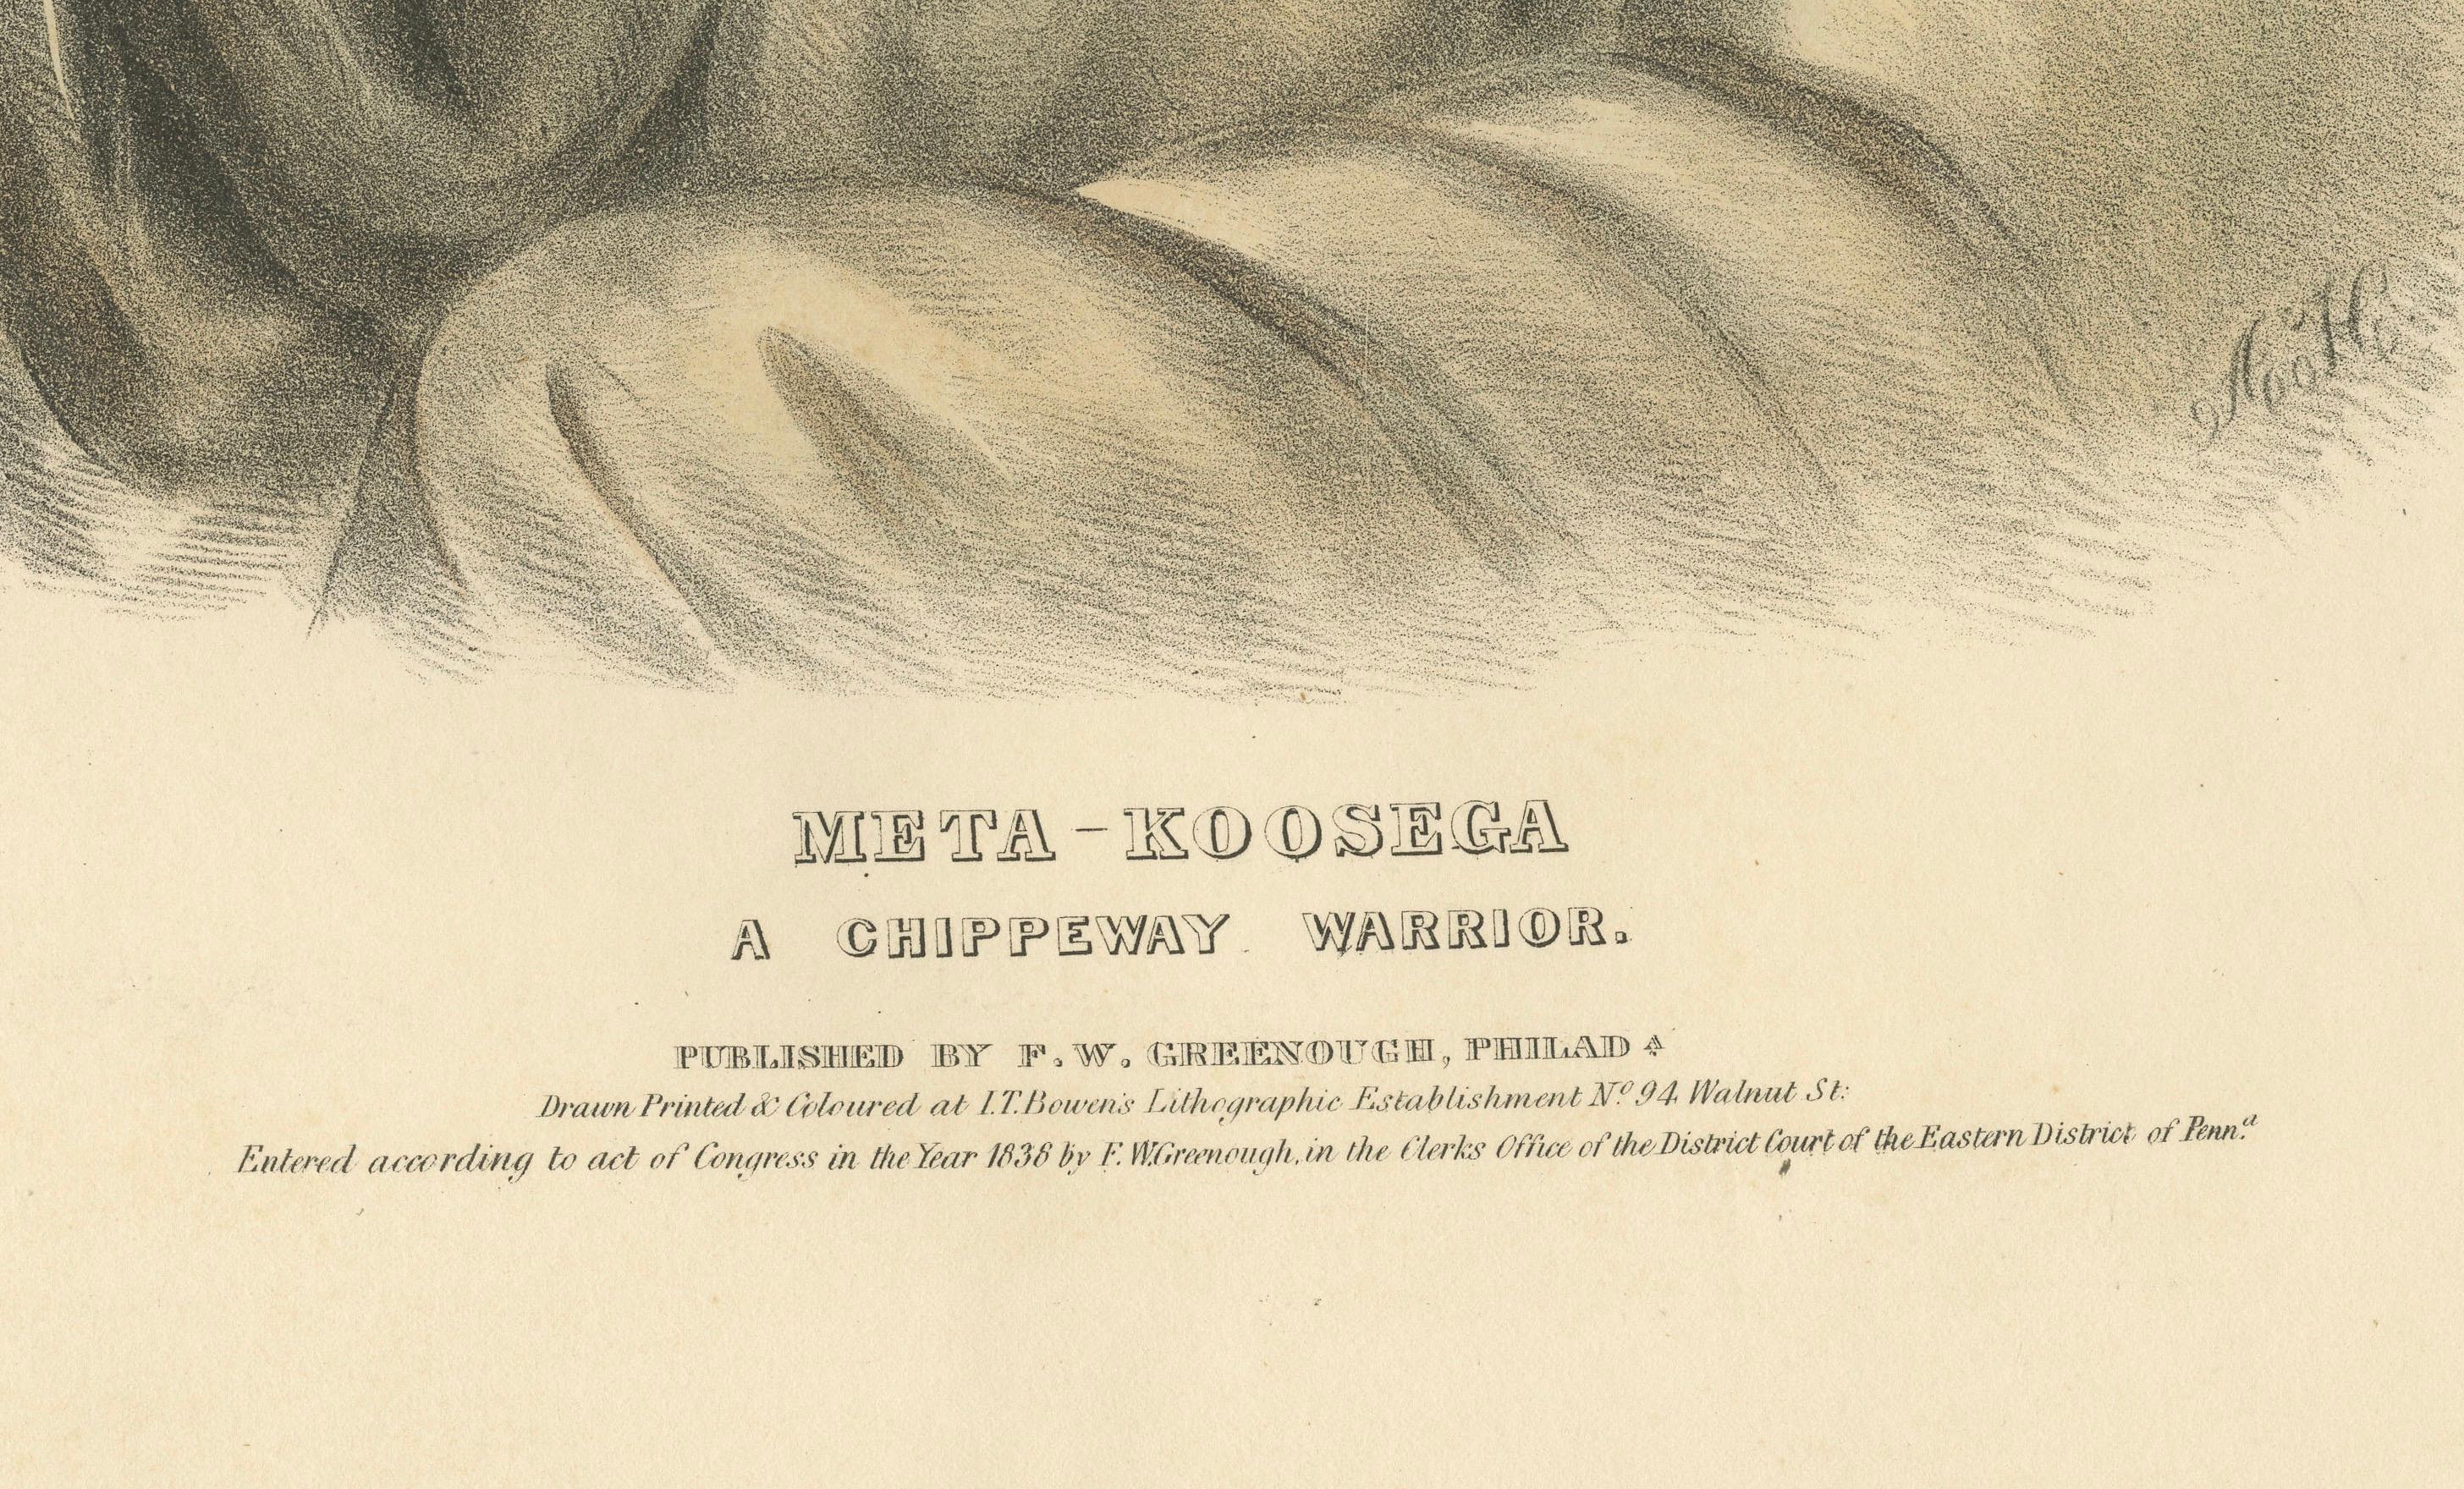 19th Century Large Antique Print of Meta-Koosega, an Ojibwe Warrior, circa 1838 For Sale